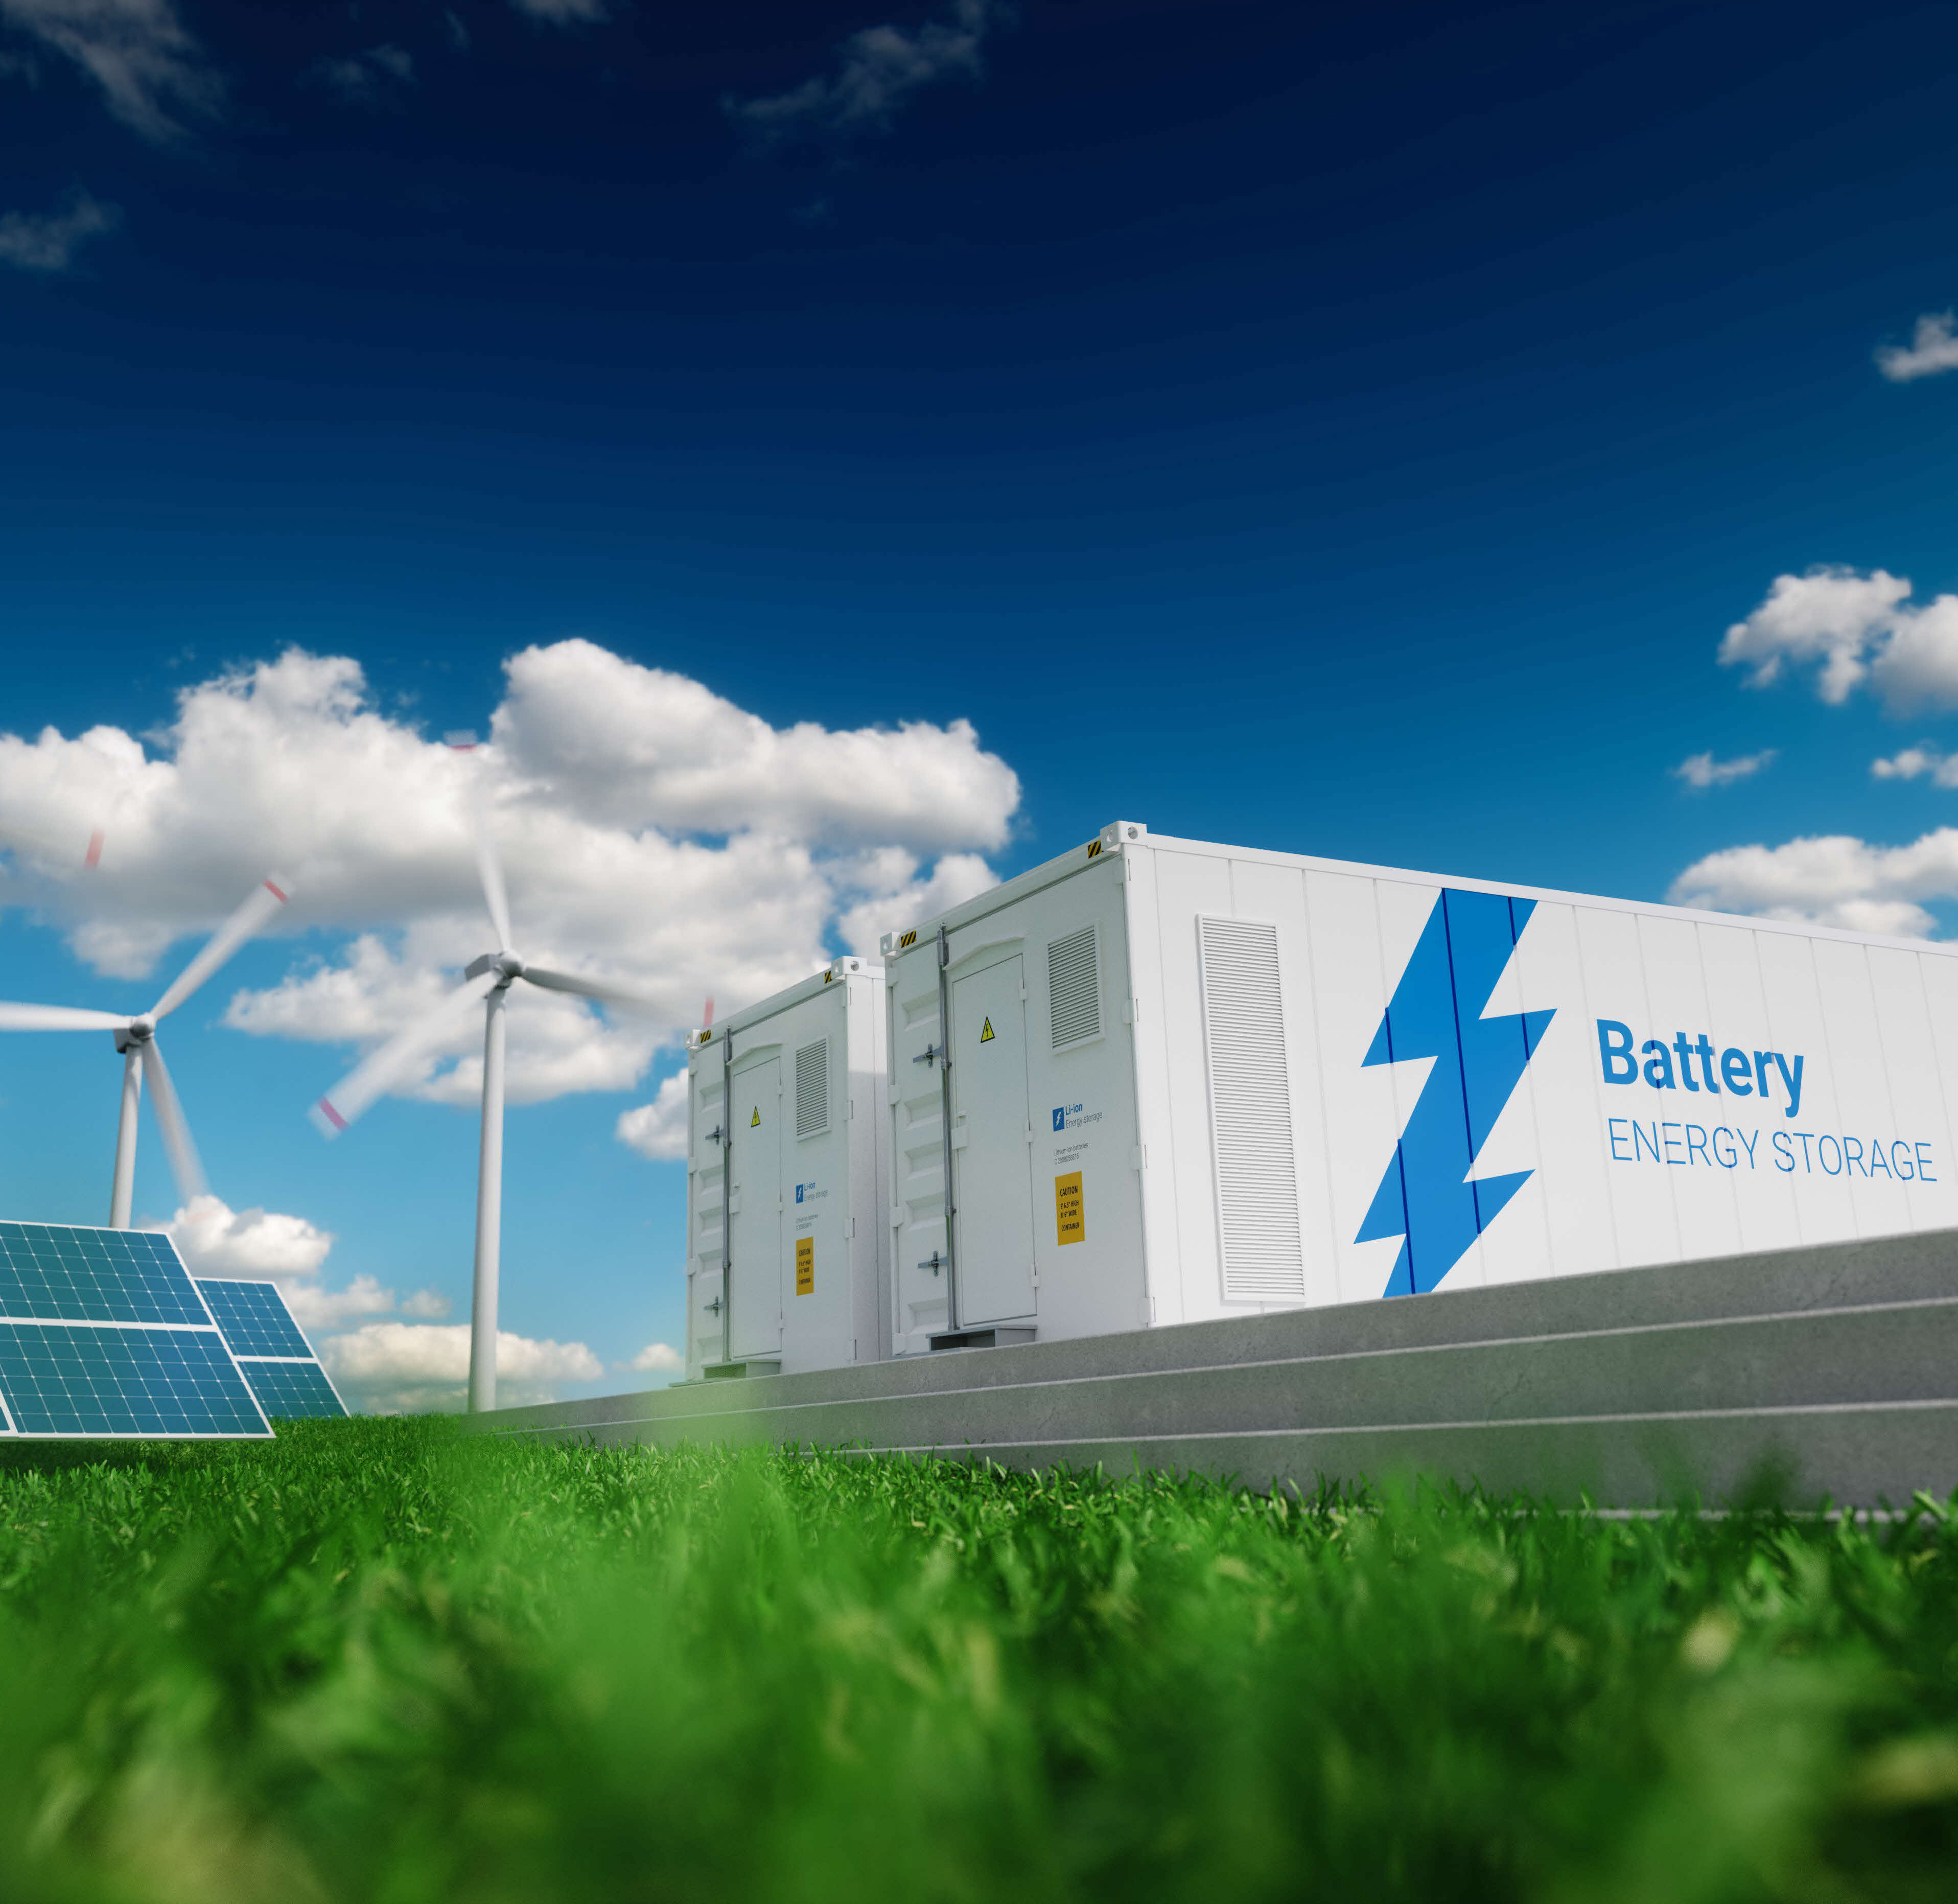 Towards hybrid renewable energy projects